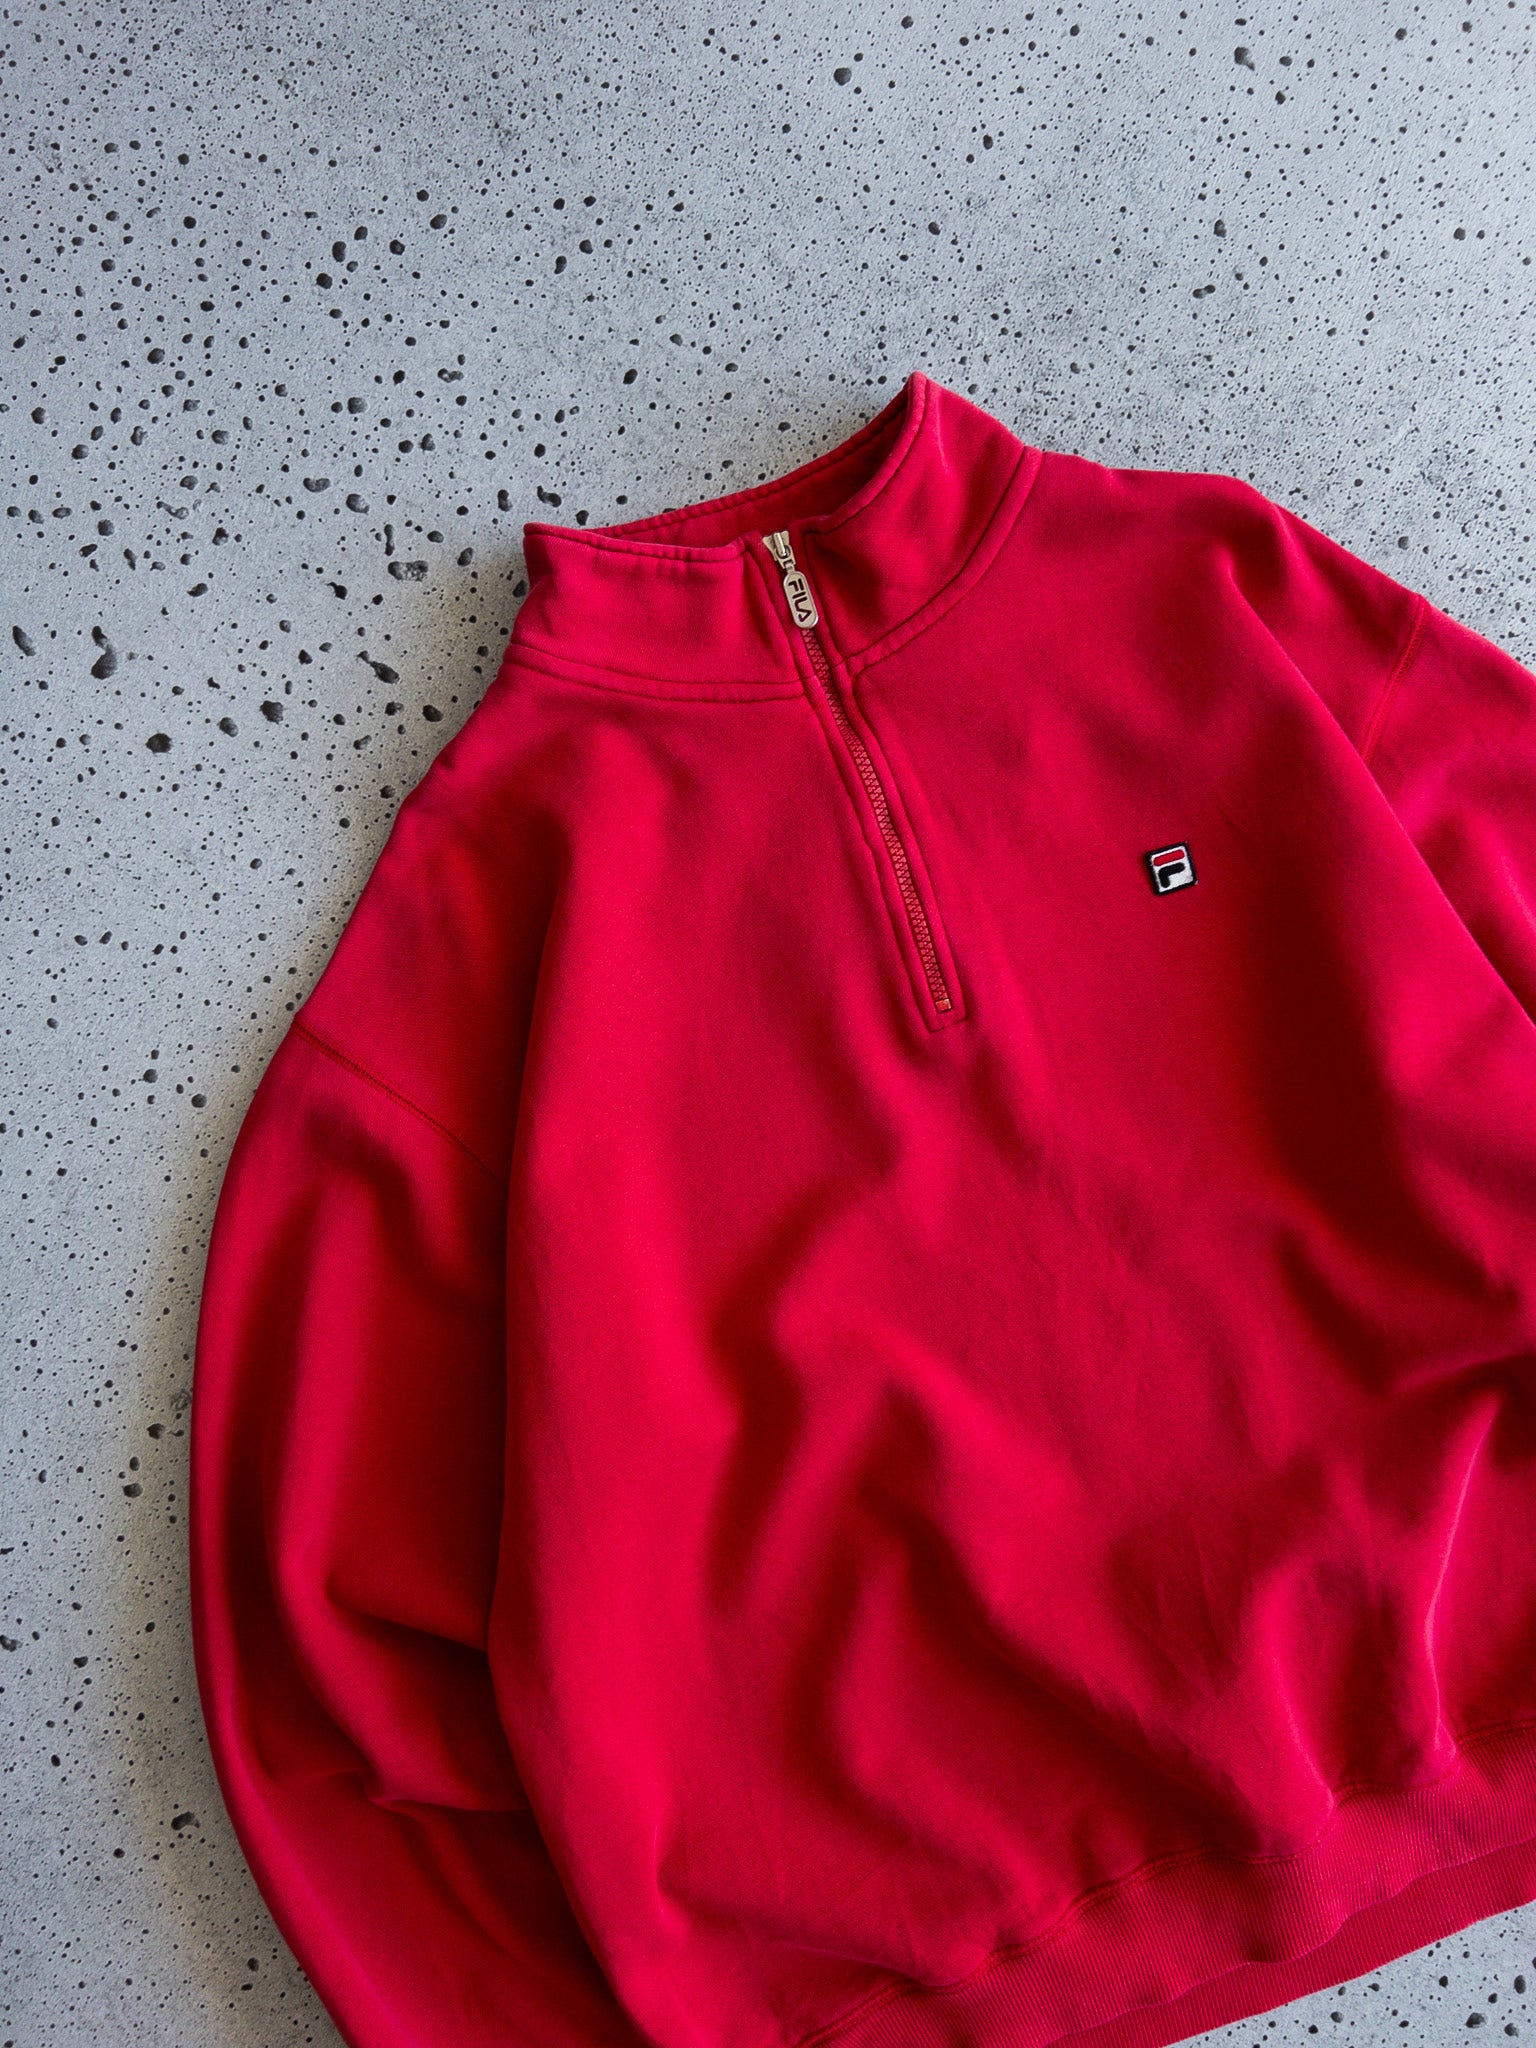 Vintage Fila Quarter Zip Sweatshirt (L)